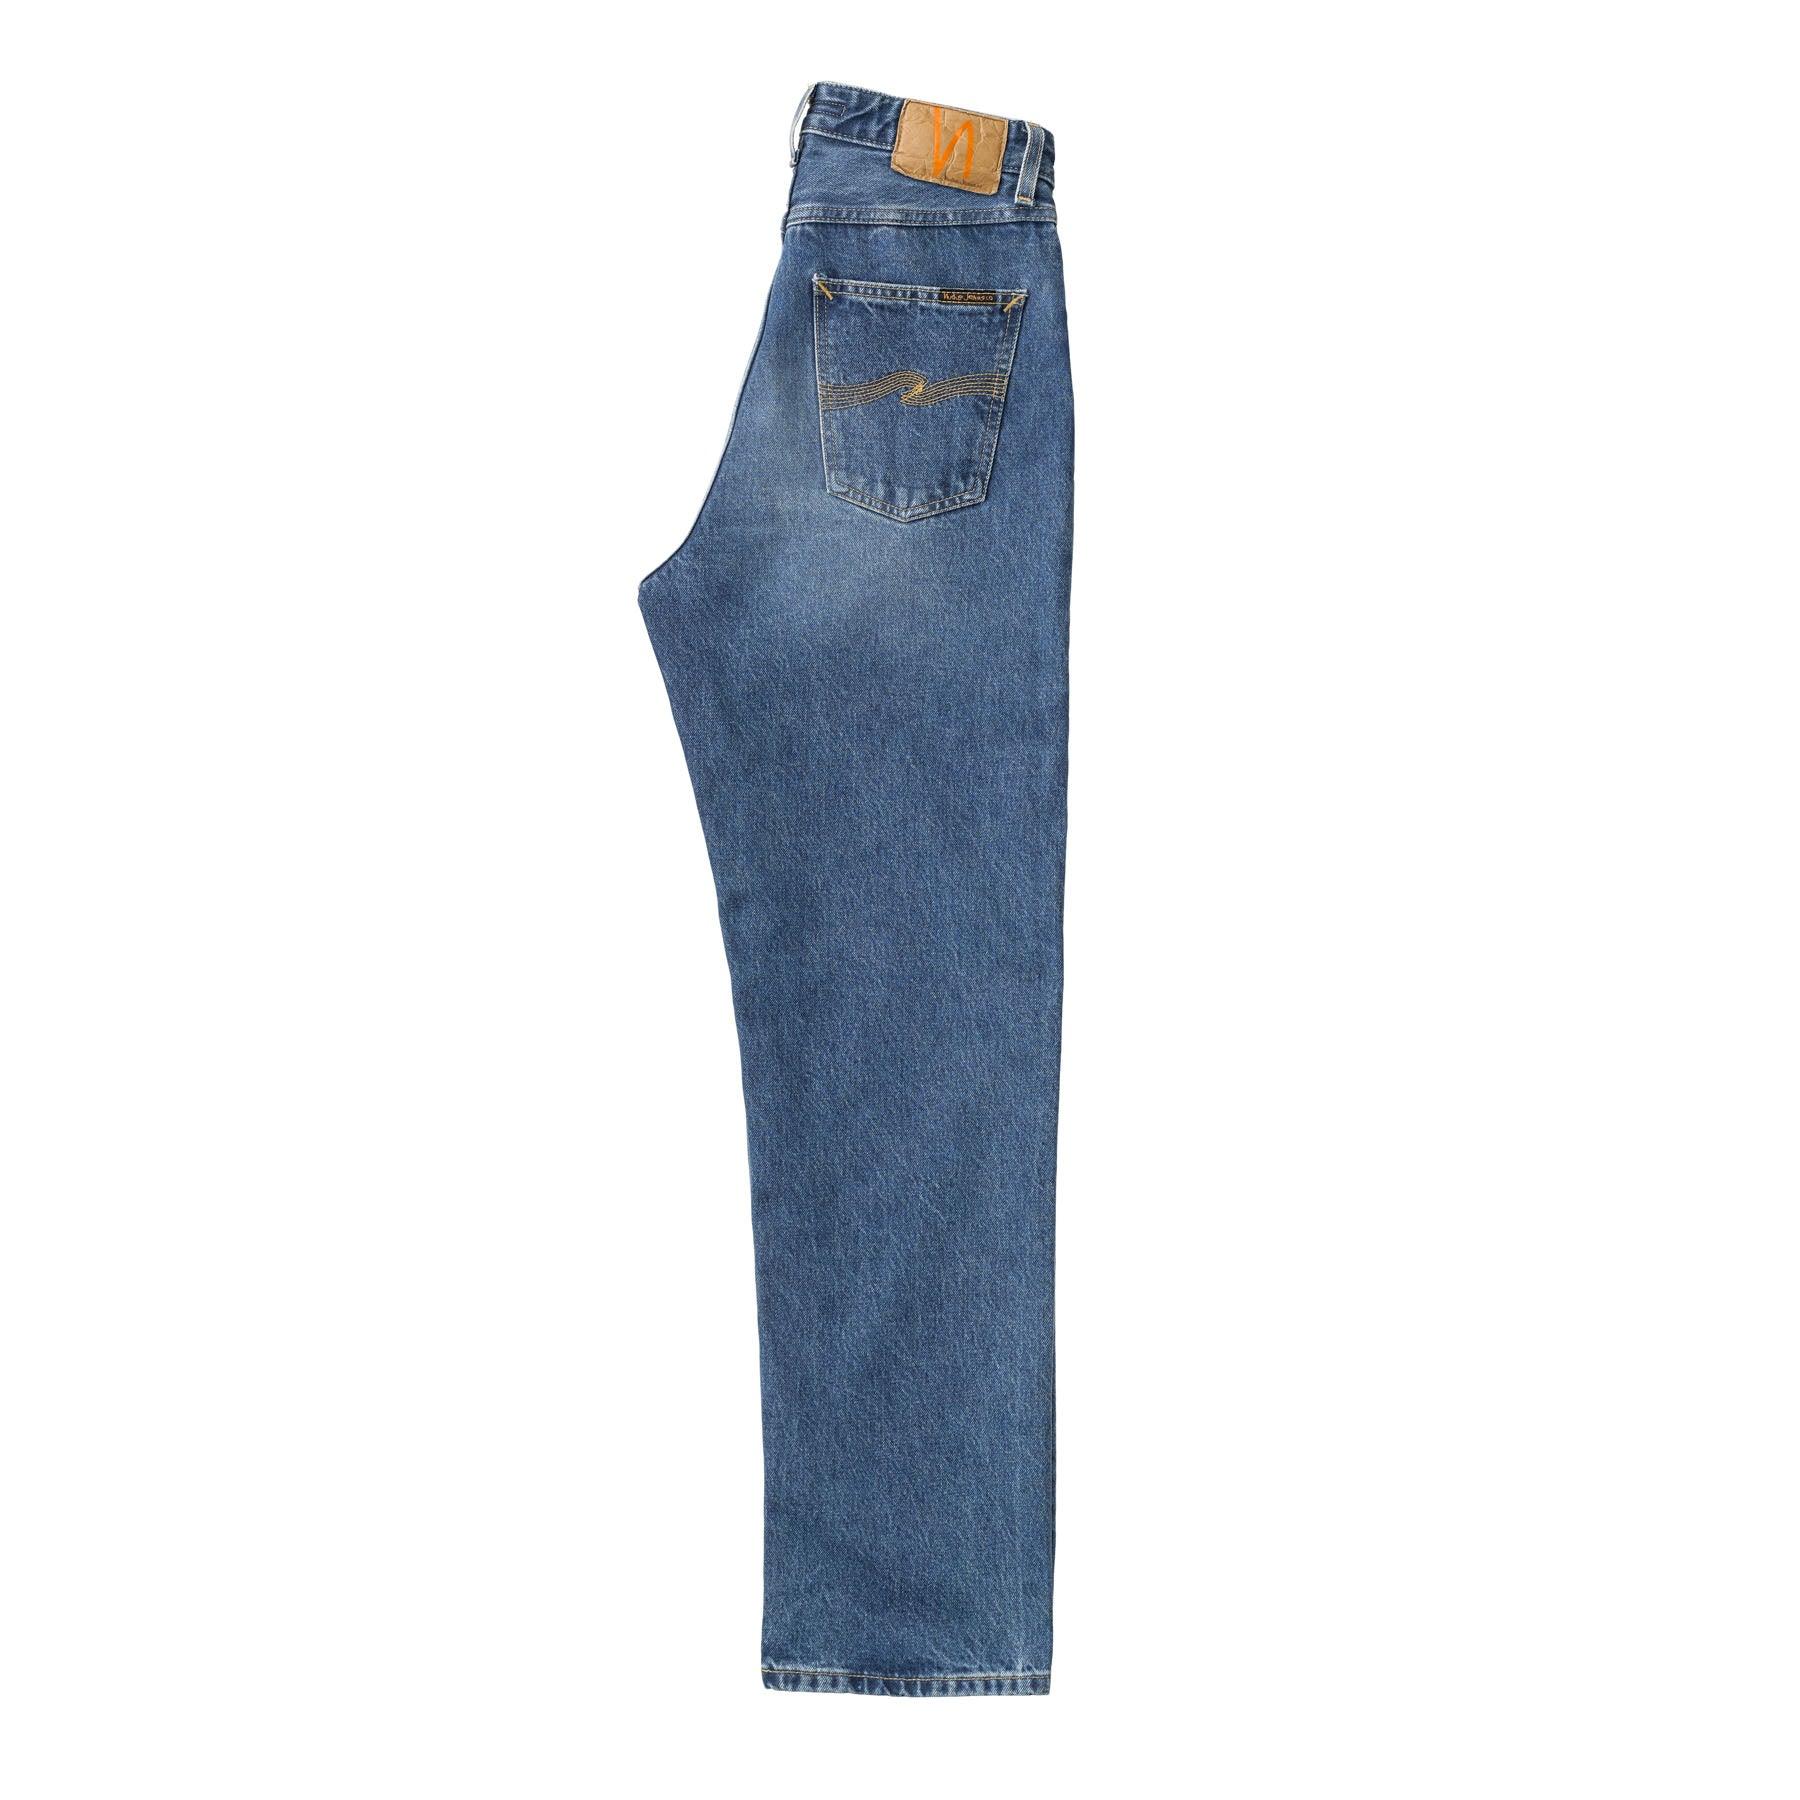 Lofty Lo Nostalgic Blue - INHABIT - Exclusive Stockist of Nudie Jeans